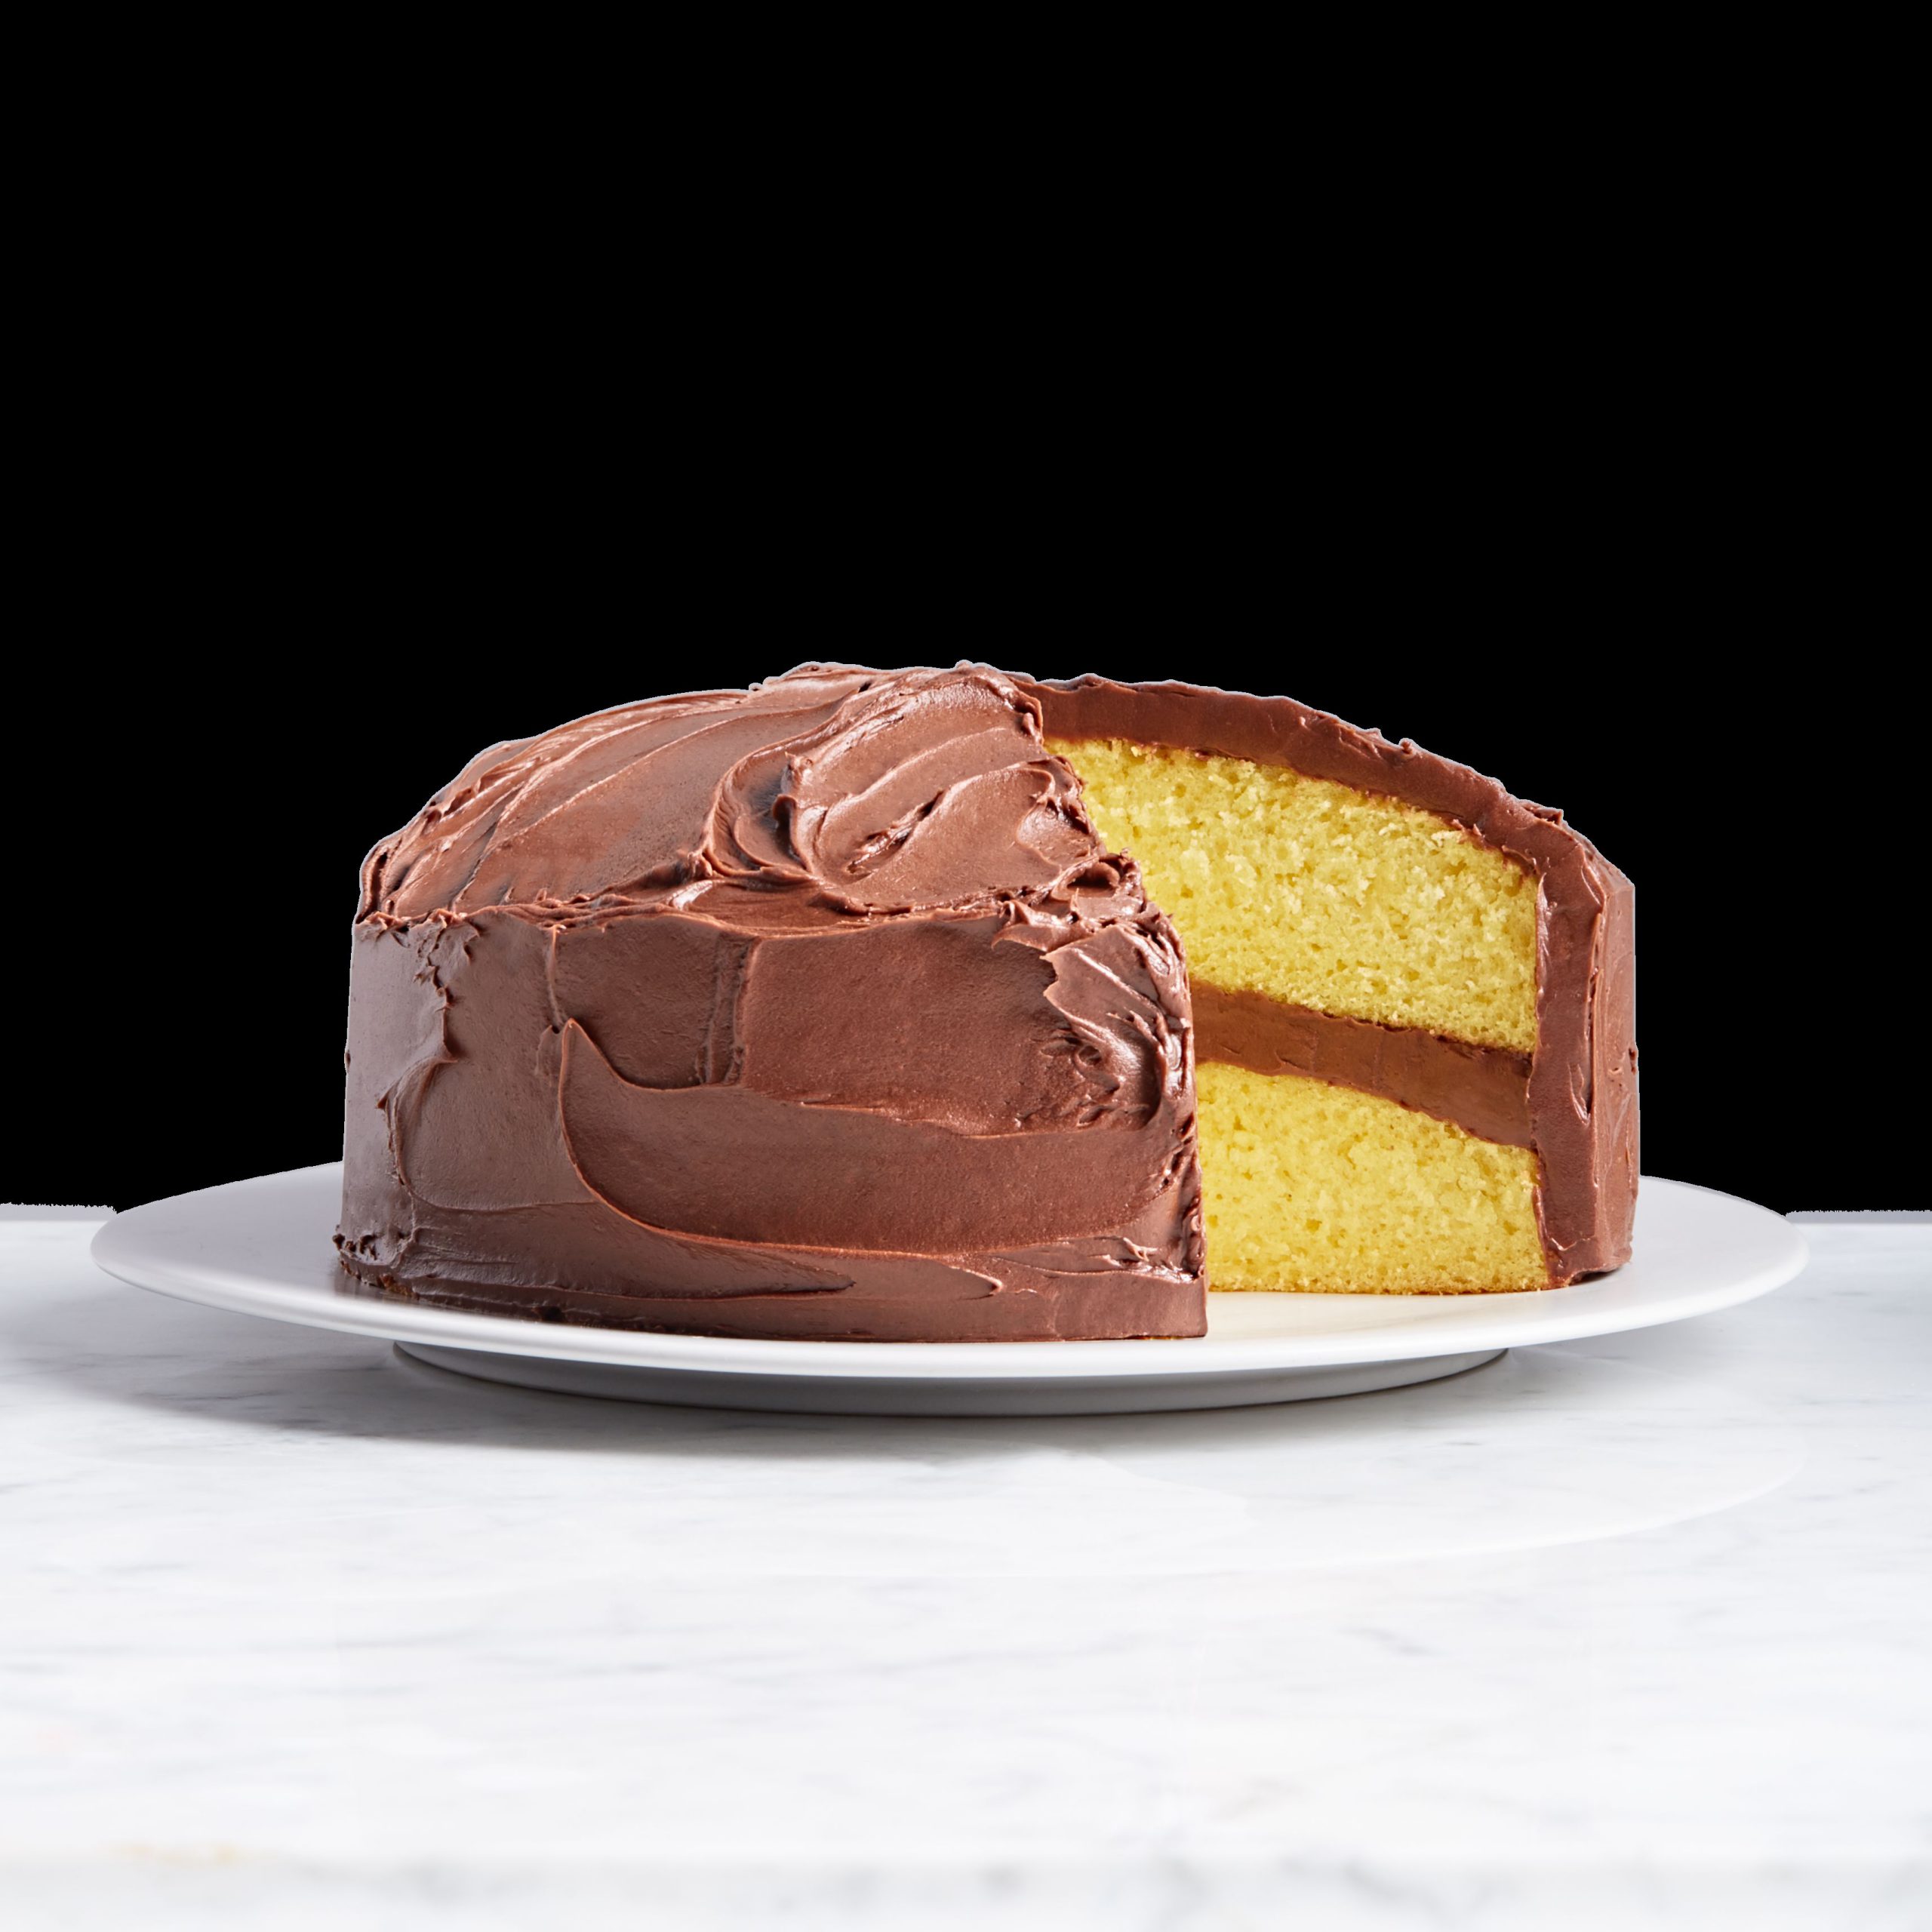 Basic Yellow Cake with Chocolate Fudge Frosting